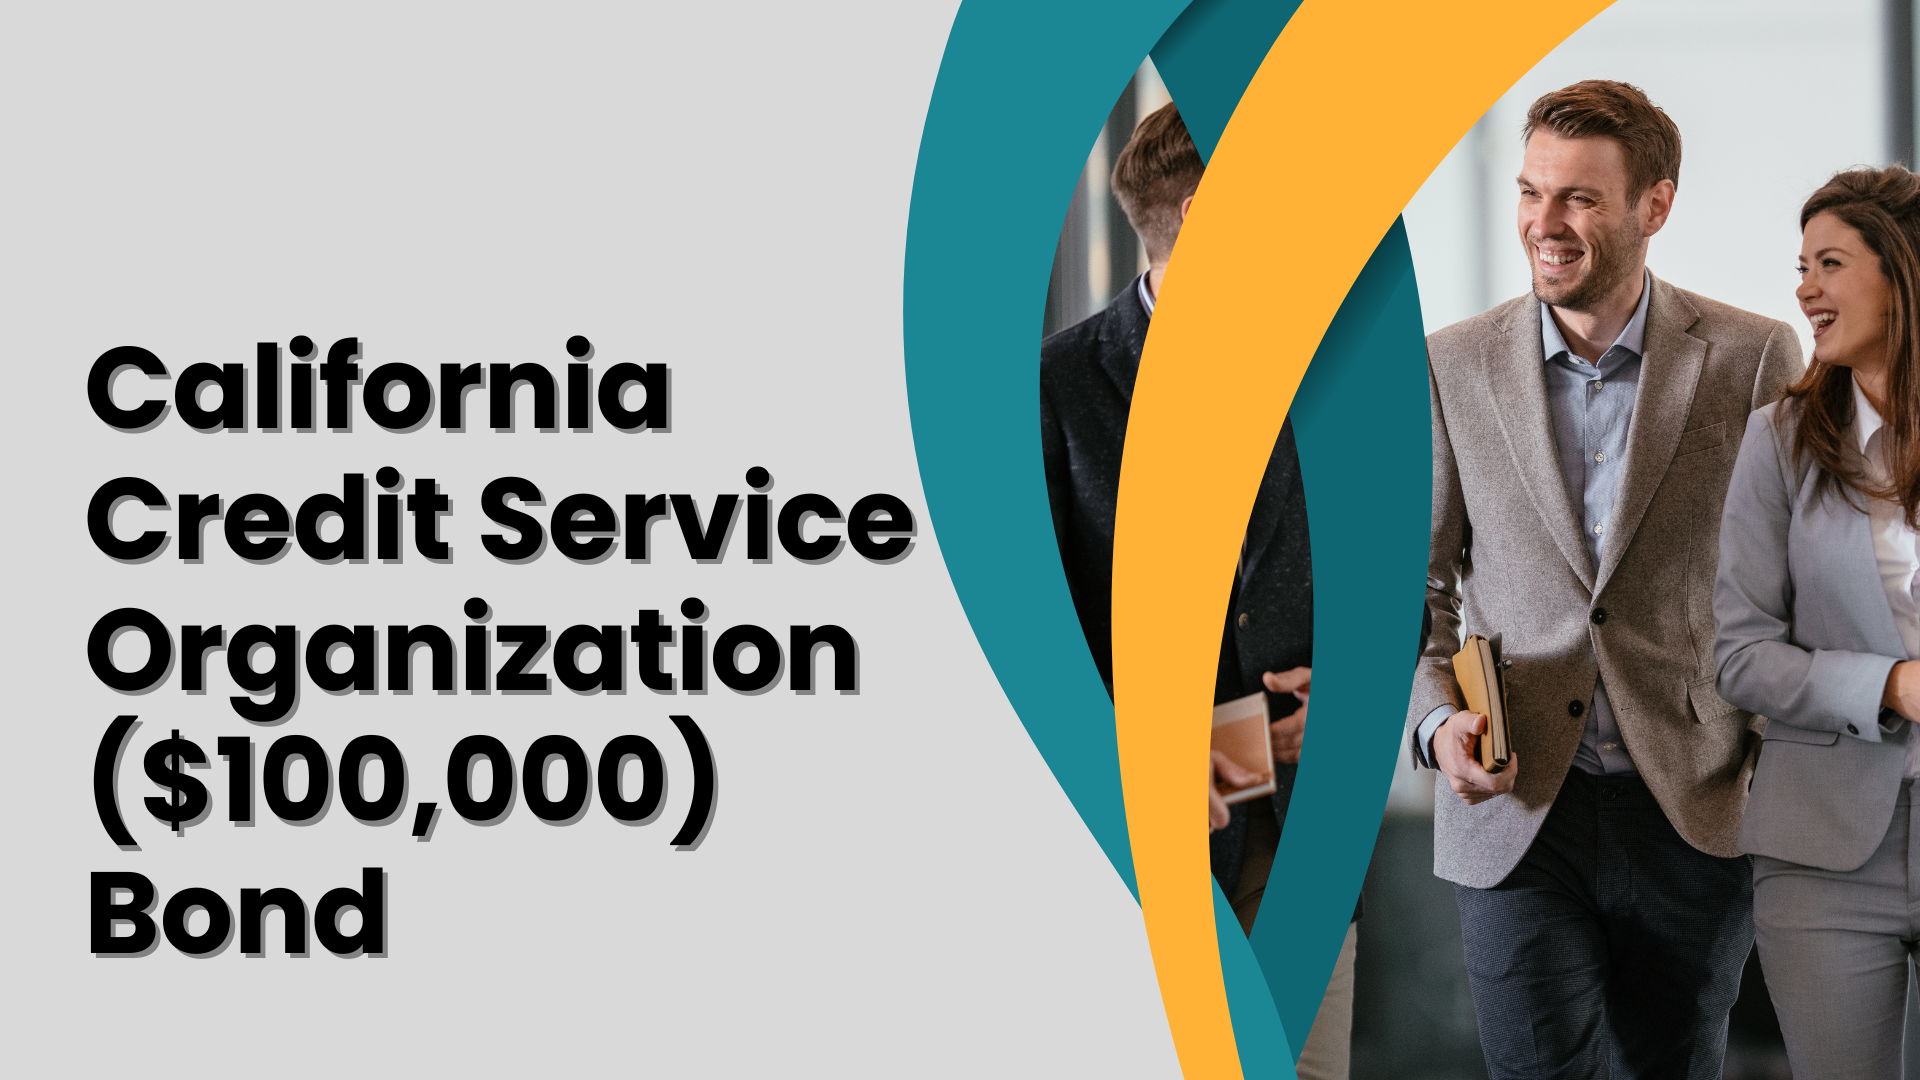 Surety Bond-California Credit Service Organization ($100,000) Bond